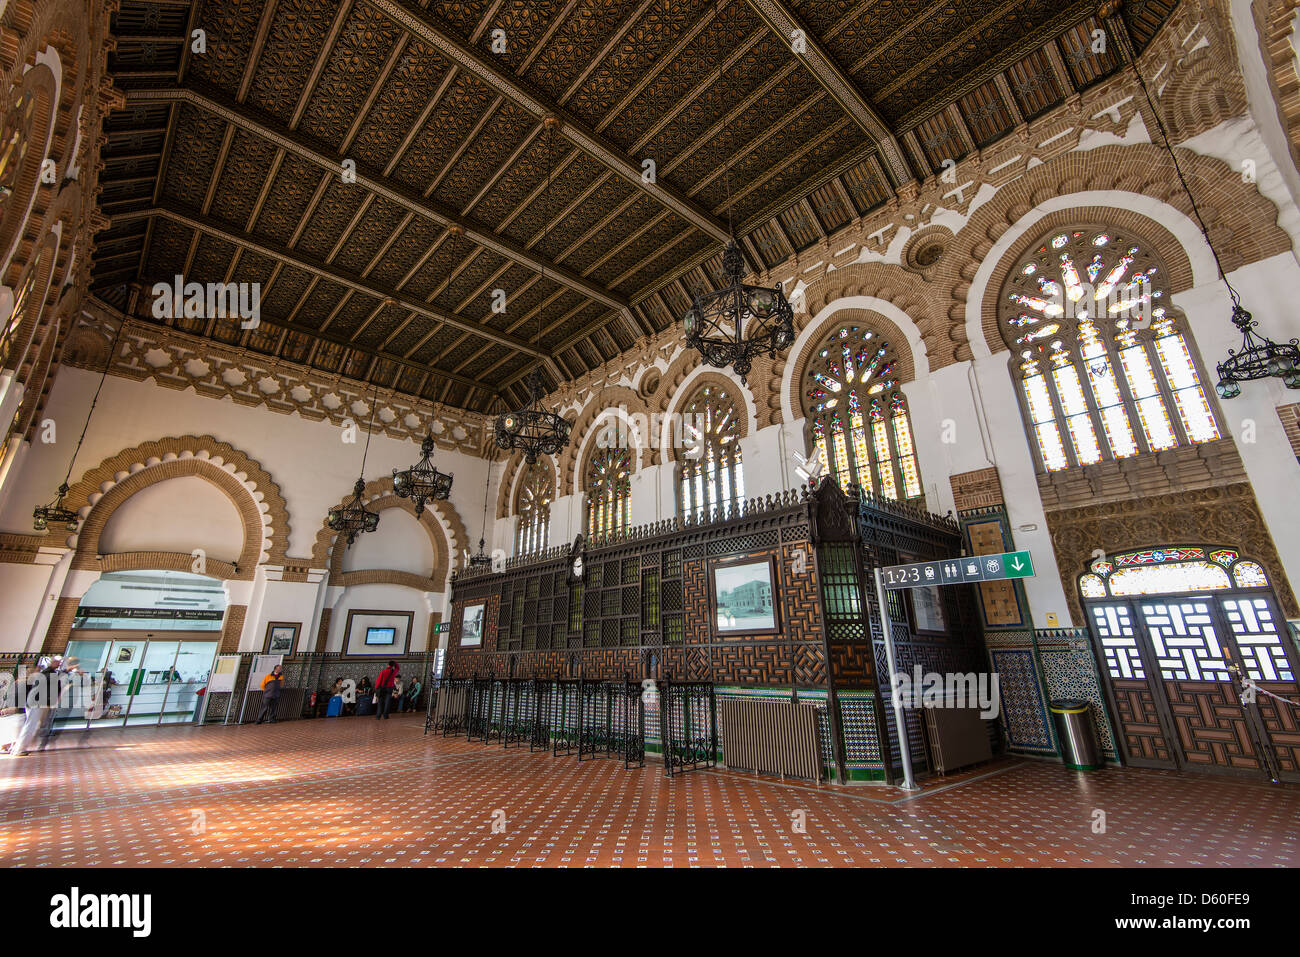 Interior of the railway station in Neo-Mudéjar style, Toledo, Castile La Mancha, Spain Stock Photo